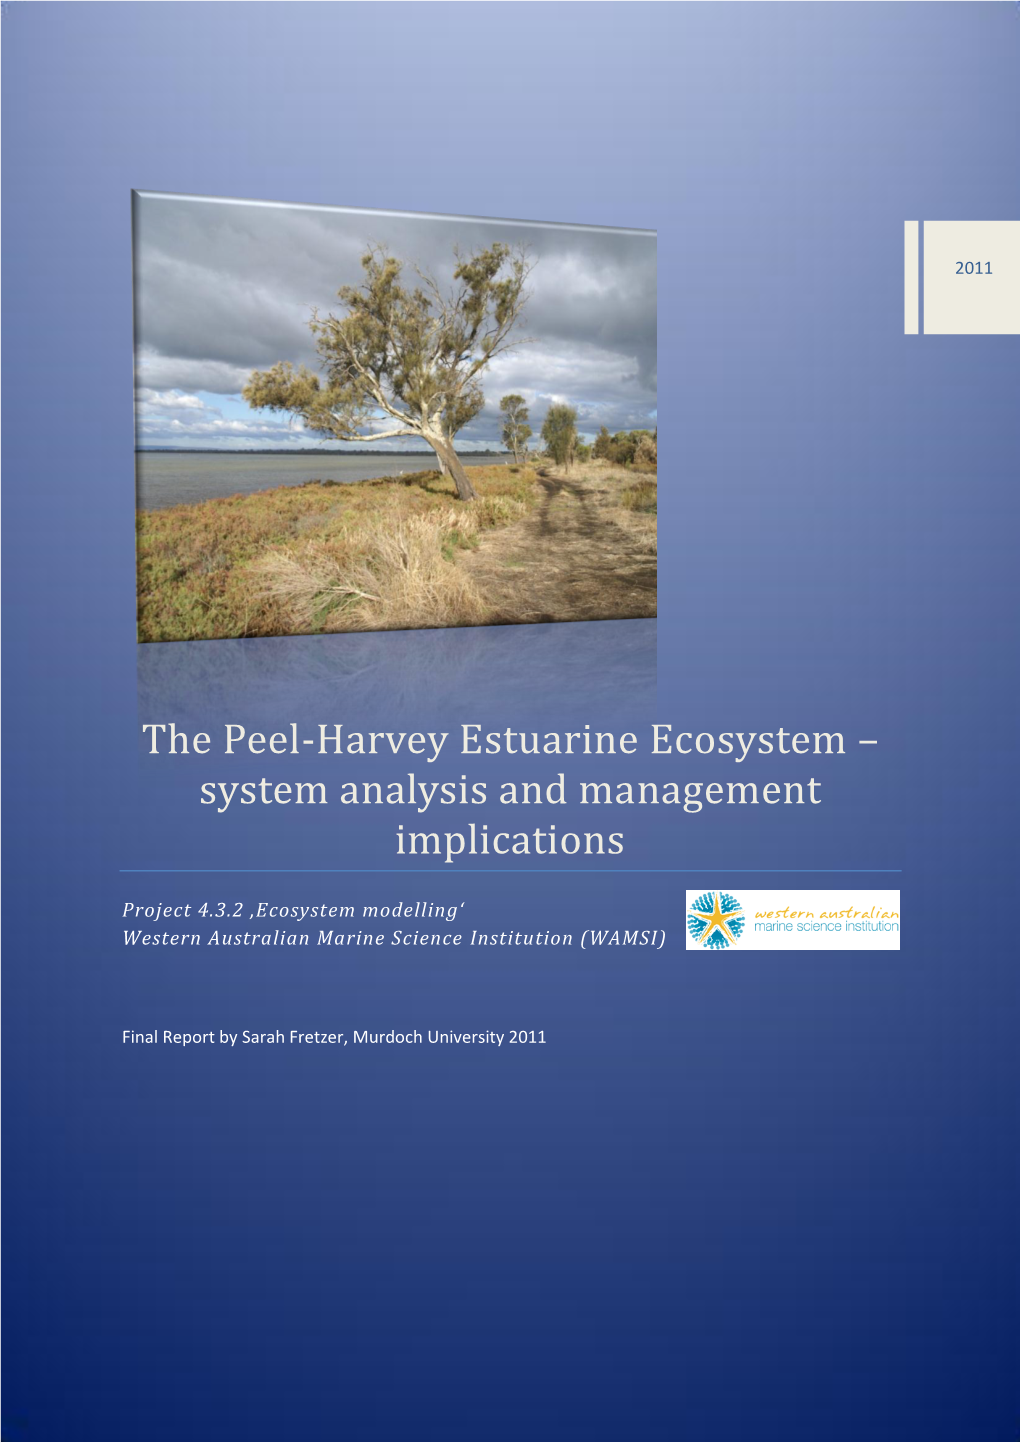 The Peel-Harvey Estuarine Ecosystem – System Analysis and Management Implications